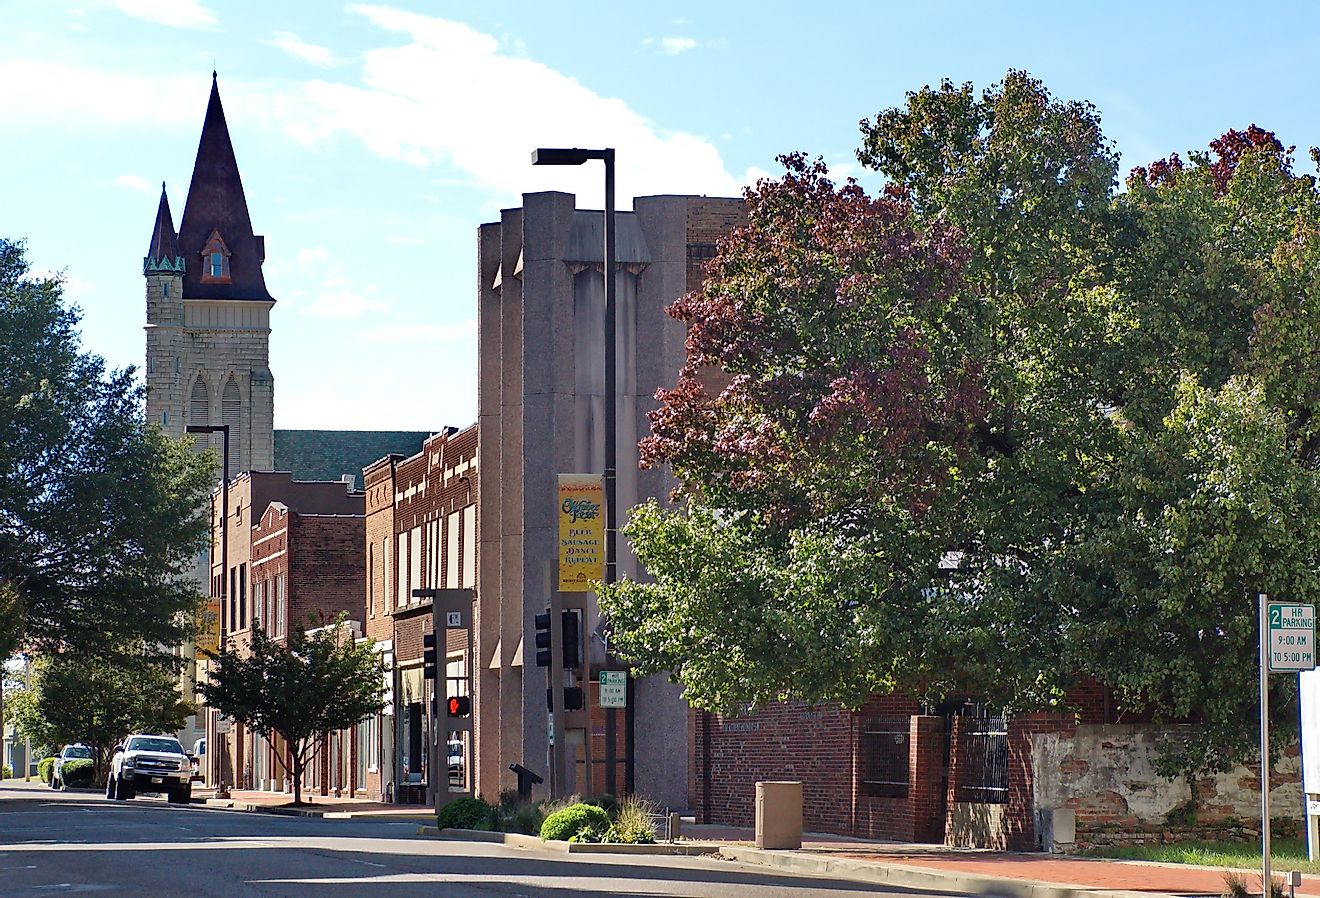 The downtown district, Paducah, Kentucky. Image credit Angela N Perryman via Shutterstock